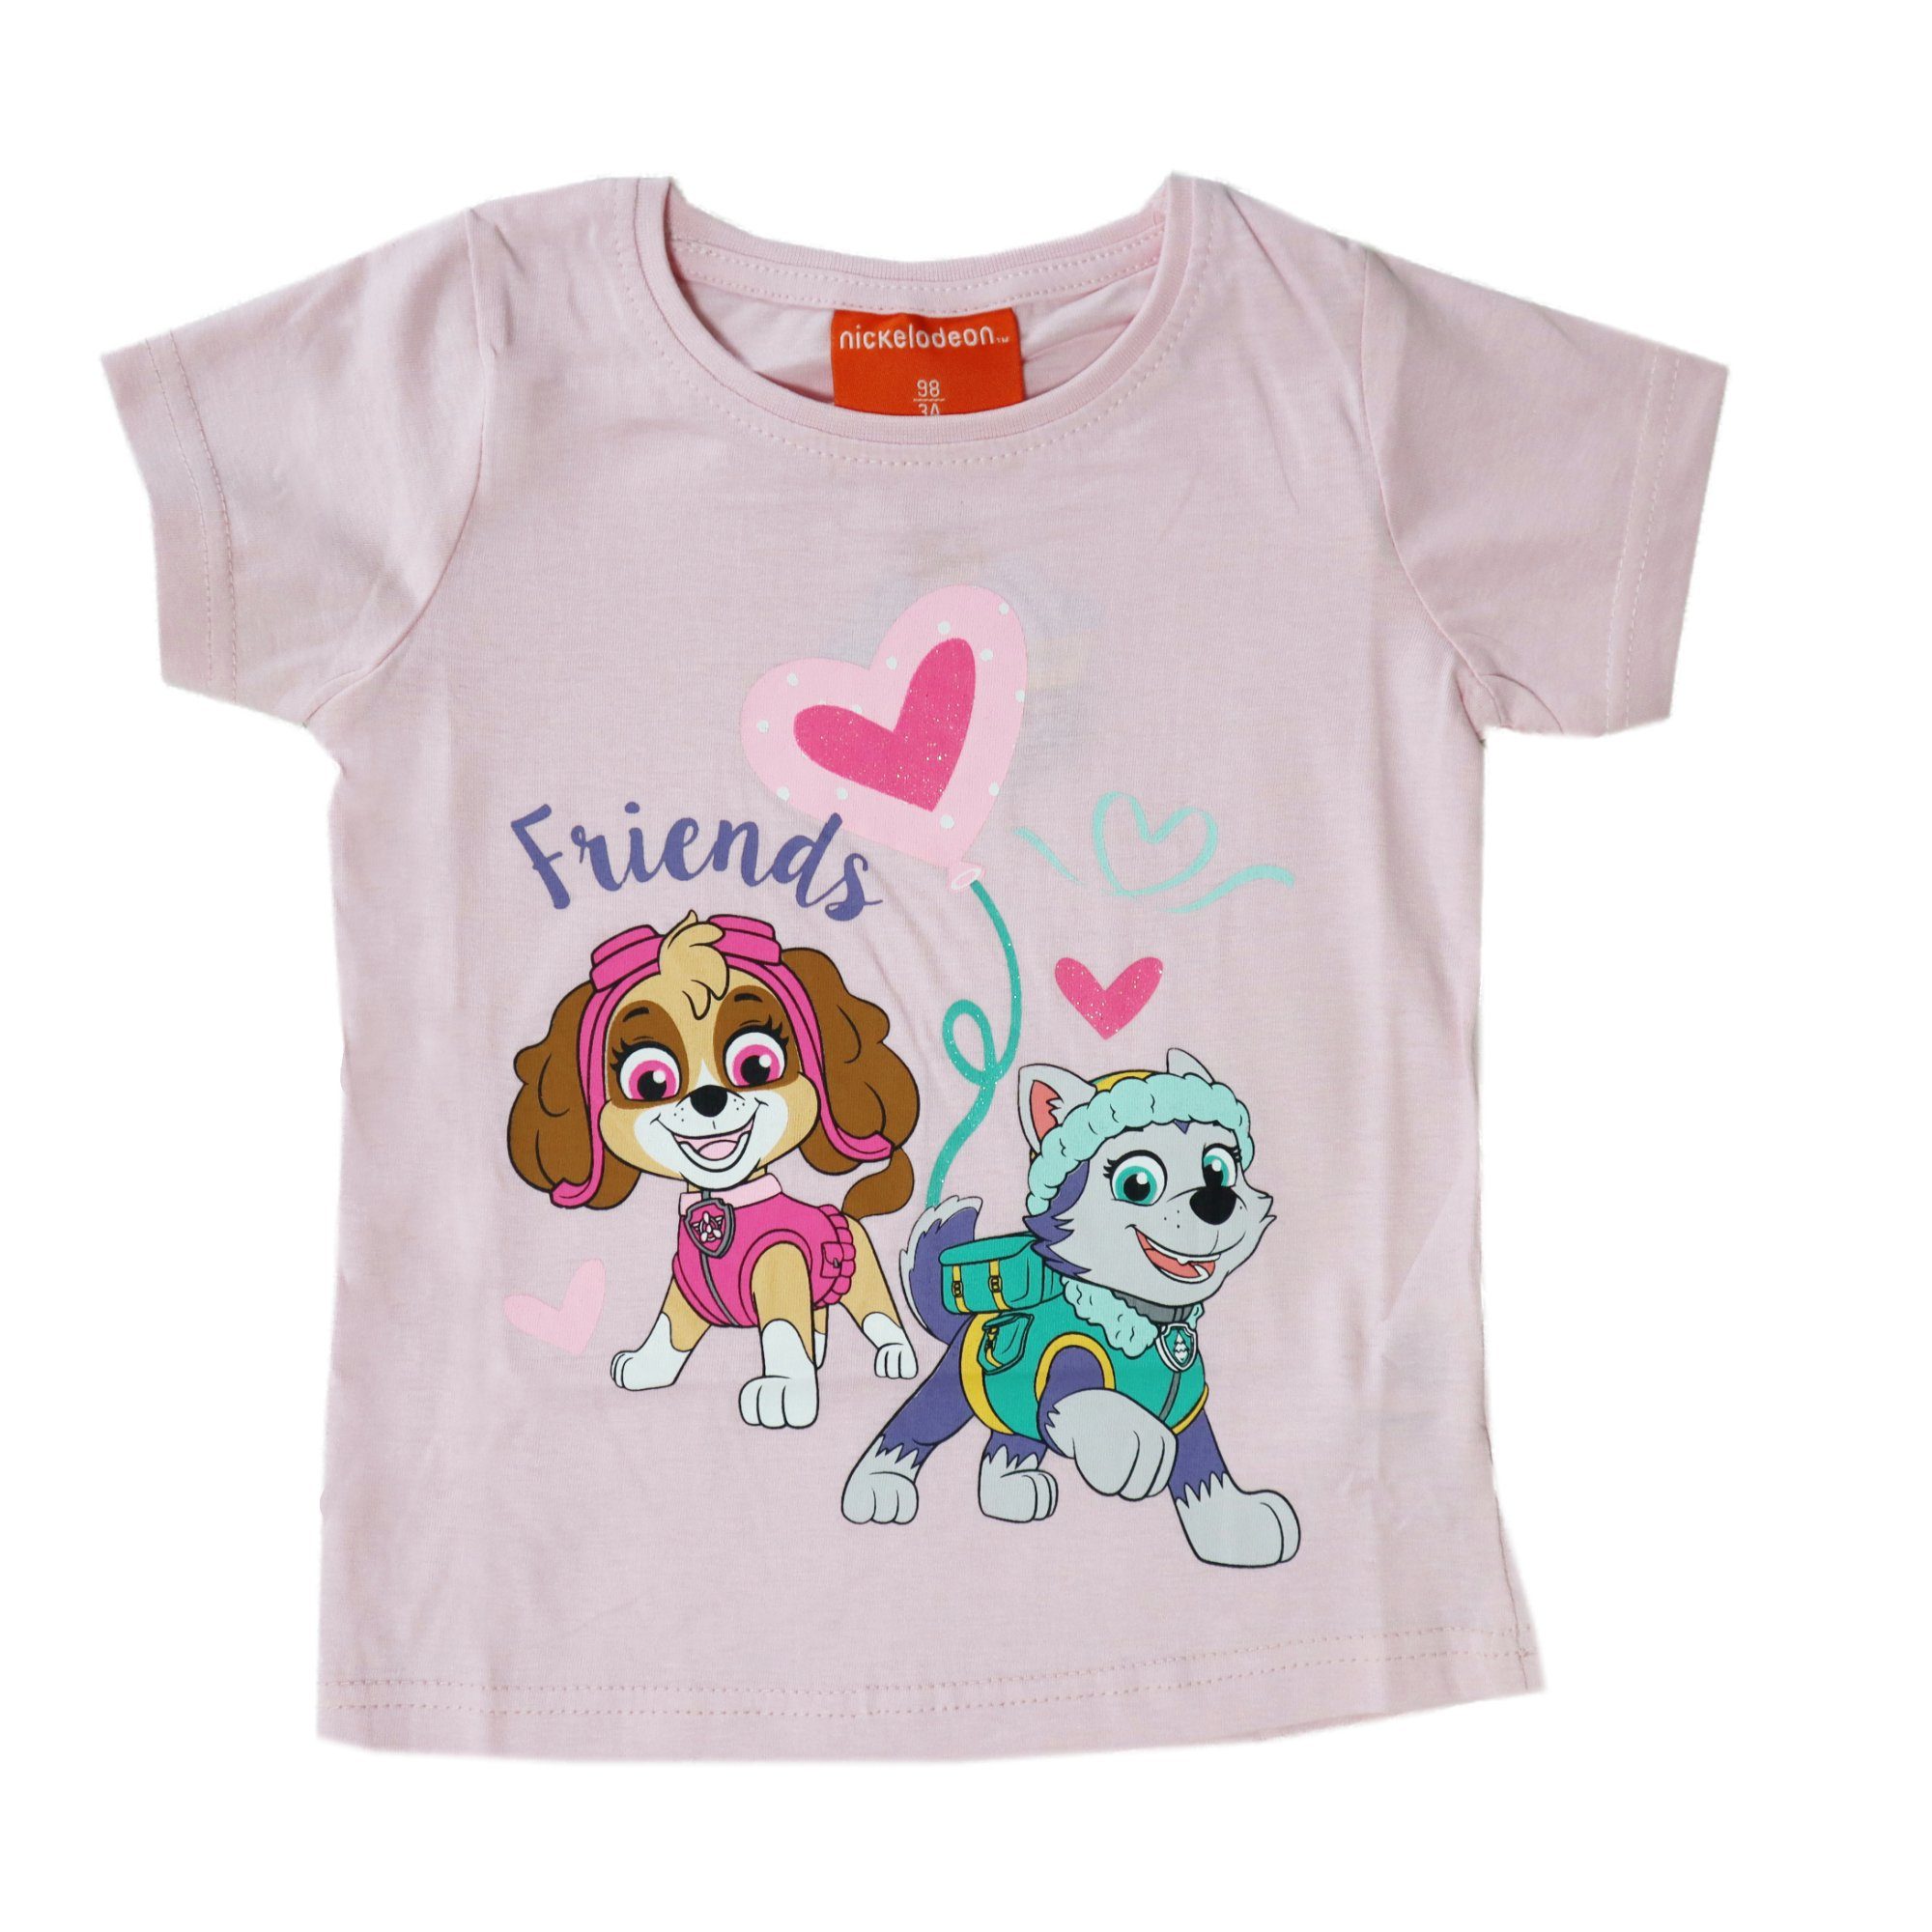 PAW PATROL Print-Shirt Skye Everest Kinder Mädchen T-Shirt Gr. 98 bis 128, 100% Baumwolle Rosa